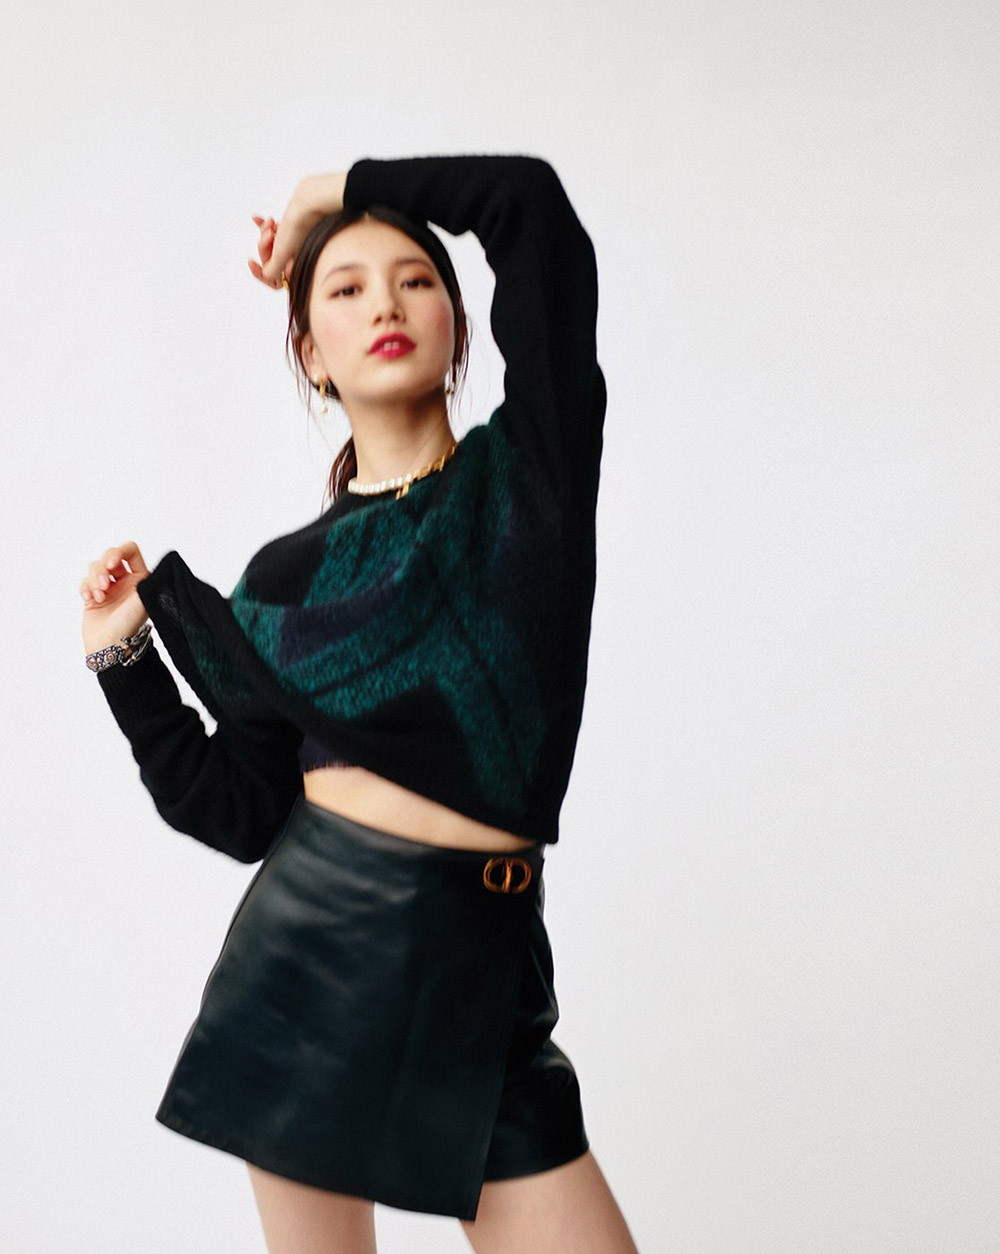 Suzy covers Vogue Korea June 2020 by Hyea W. Kang